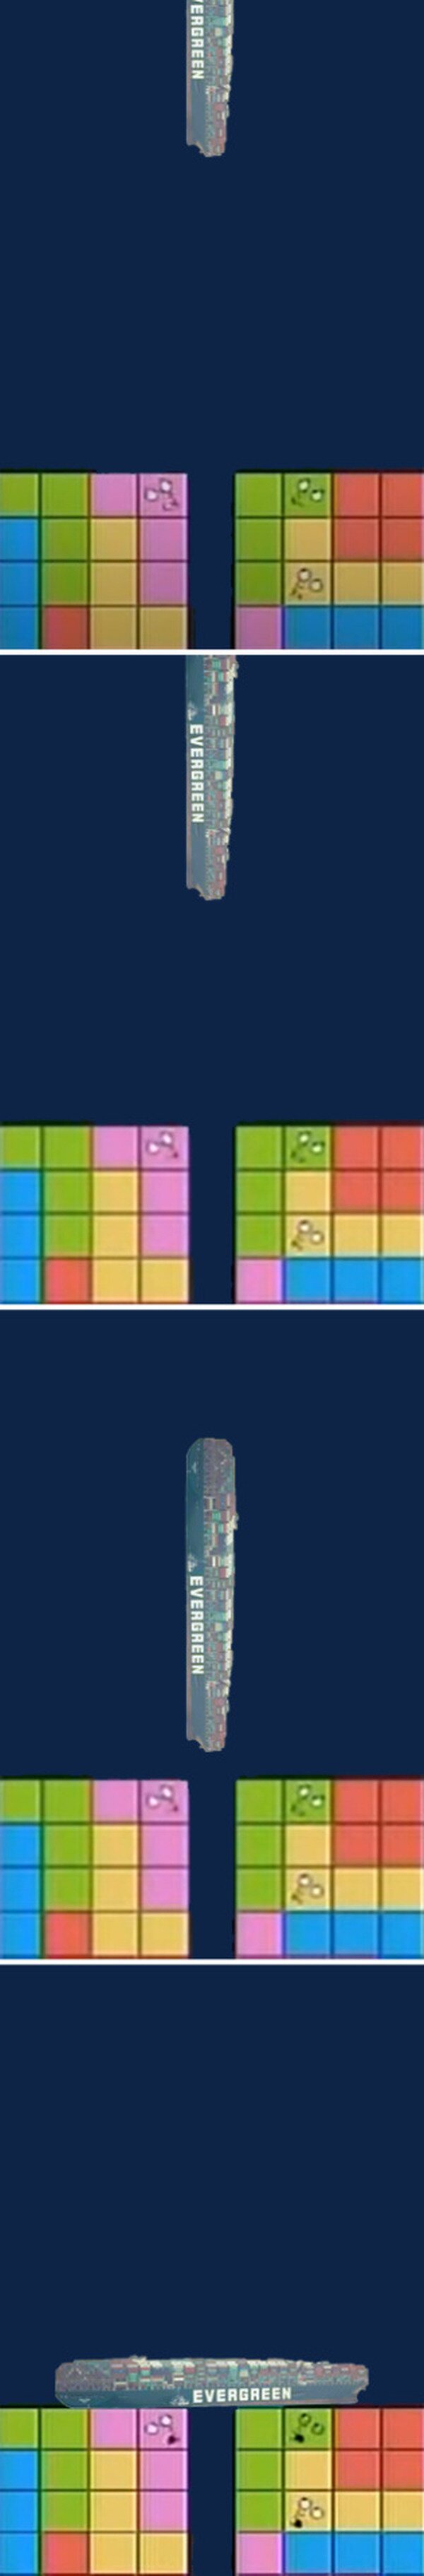 Meme_otros - Si los de Evergreen jugaran al Tetris